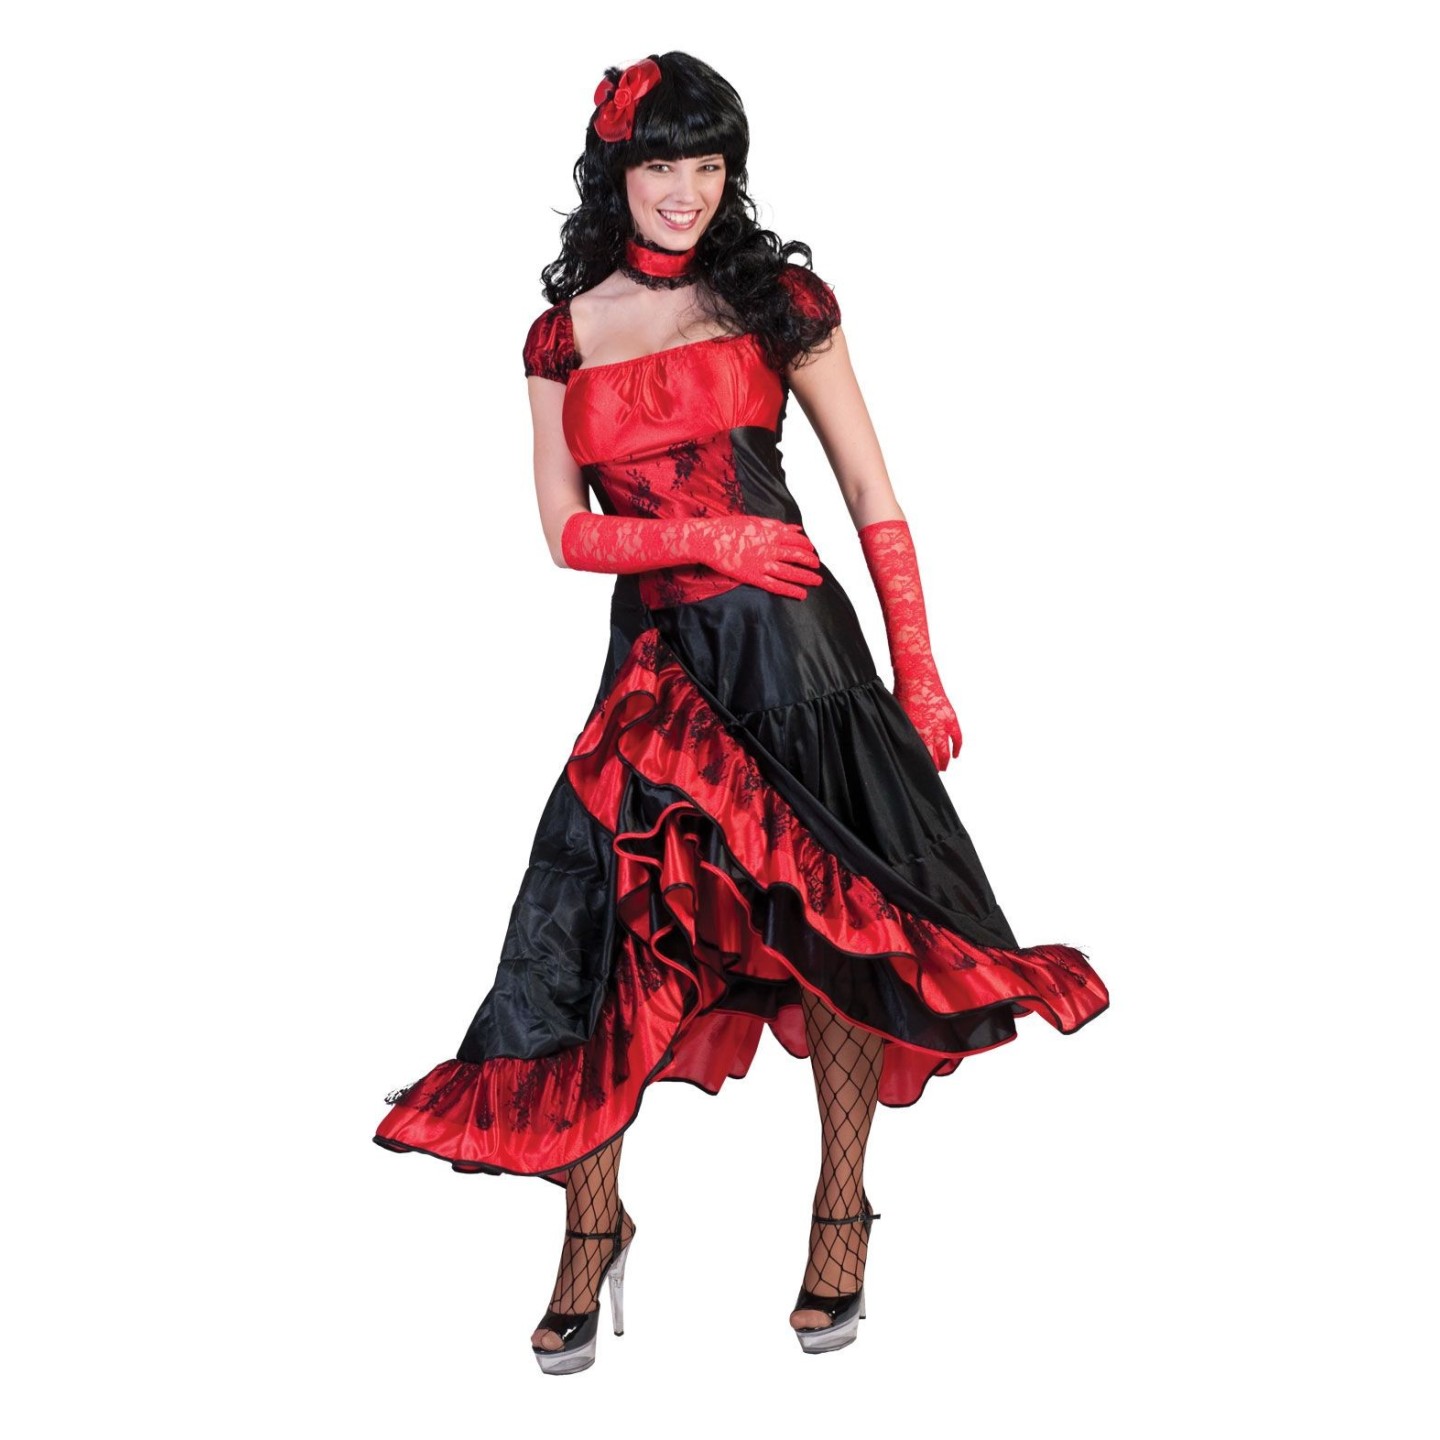 Broek Egomania Conform Saloon girl kostuum bestellen ? | Jokershop.be - Western kleding